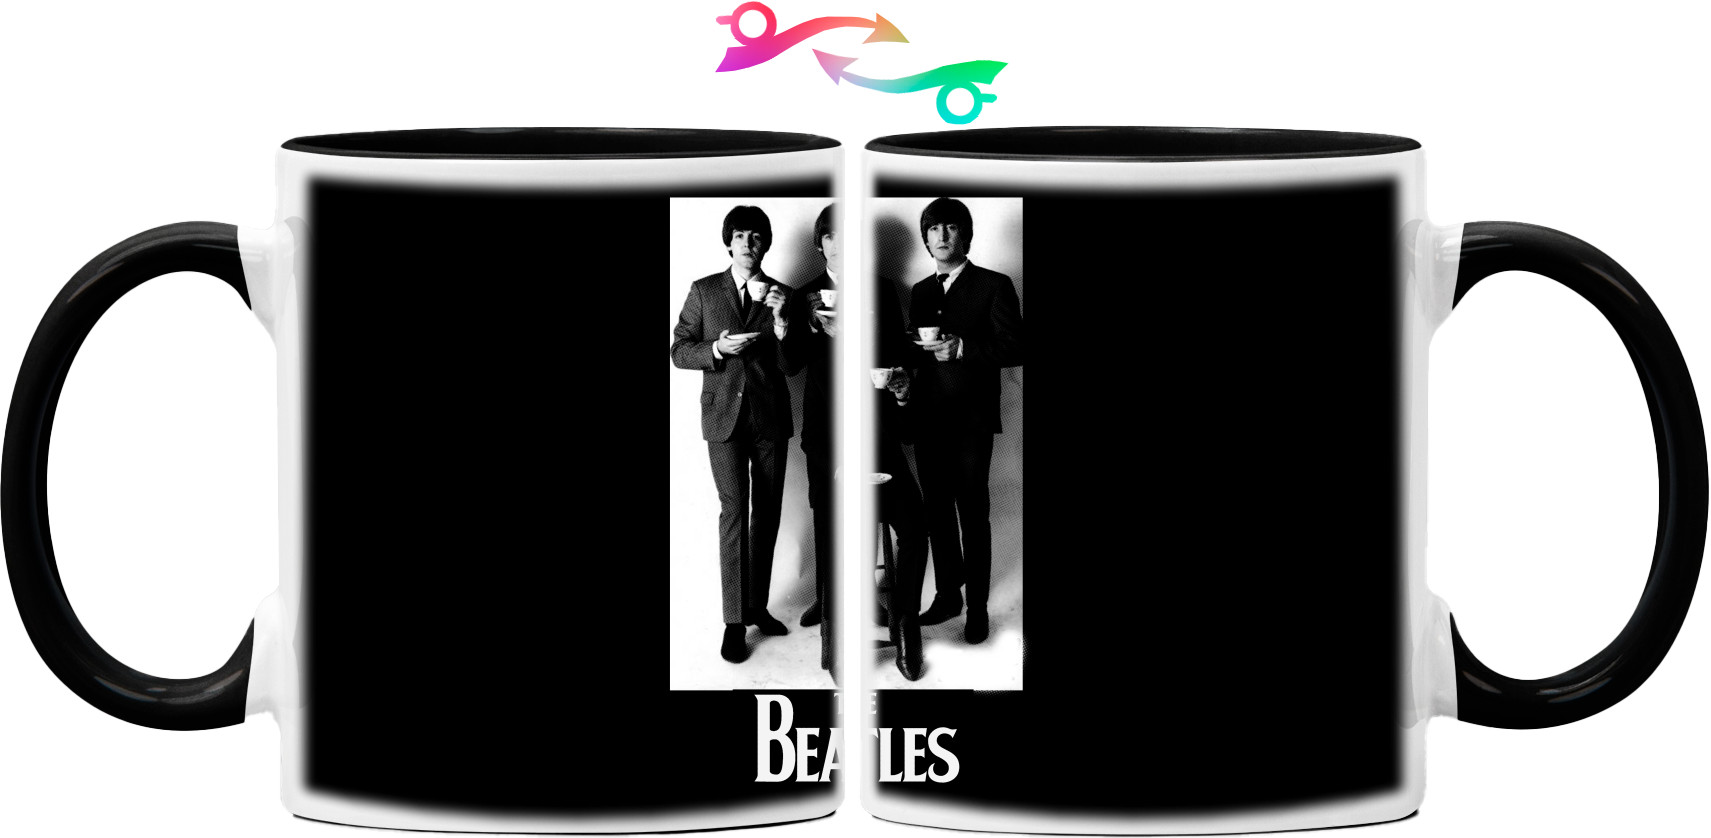 The Beatles 14